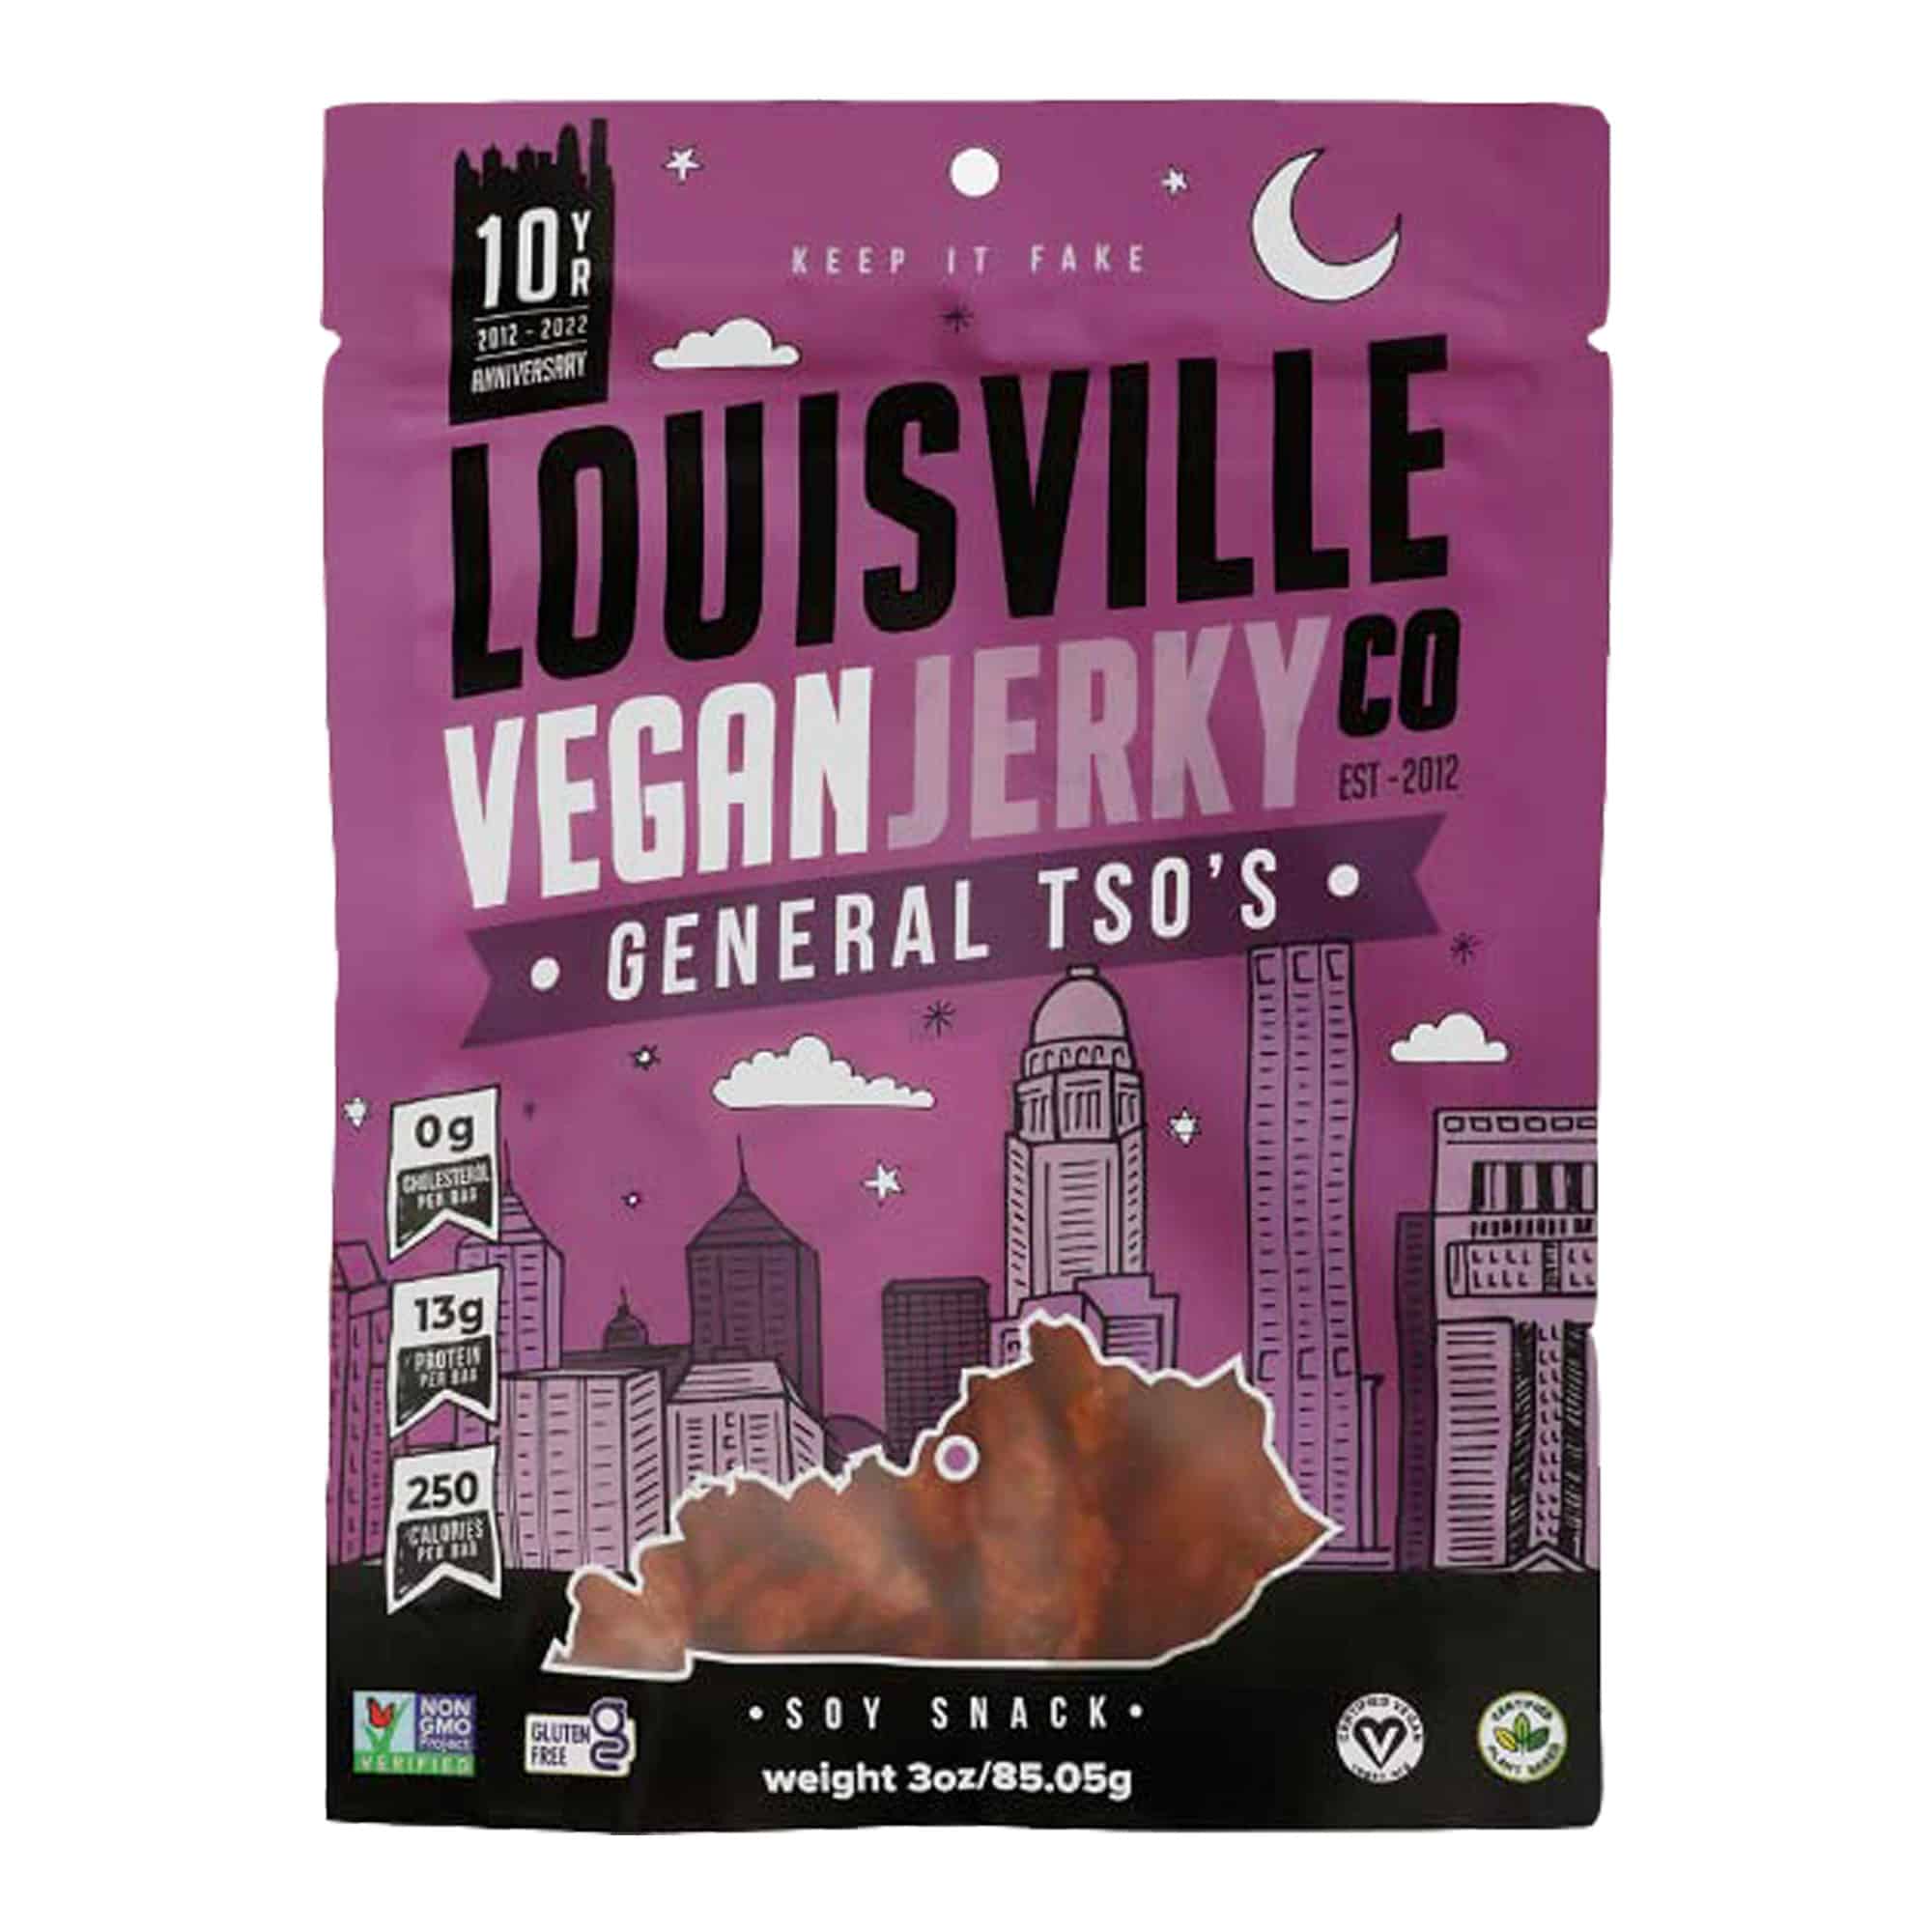 General Tso's Vegan Jerky